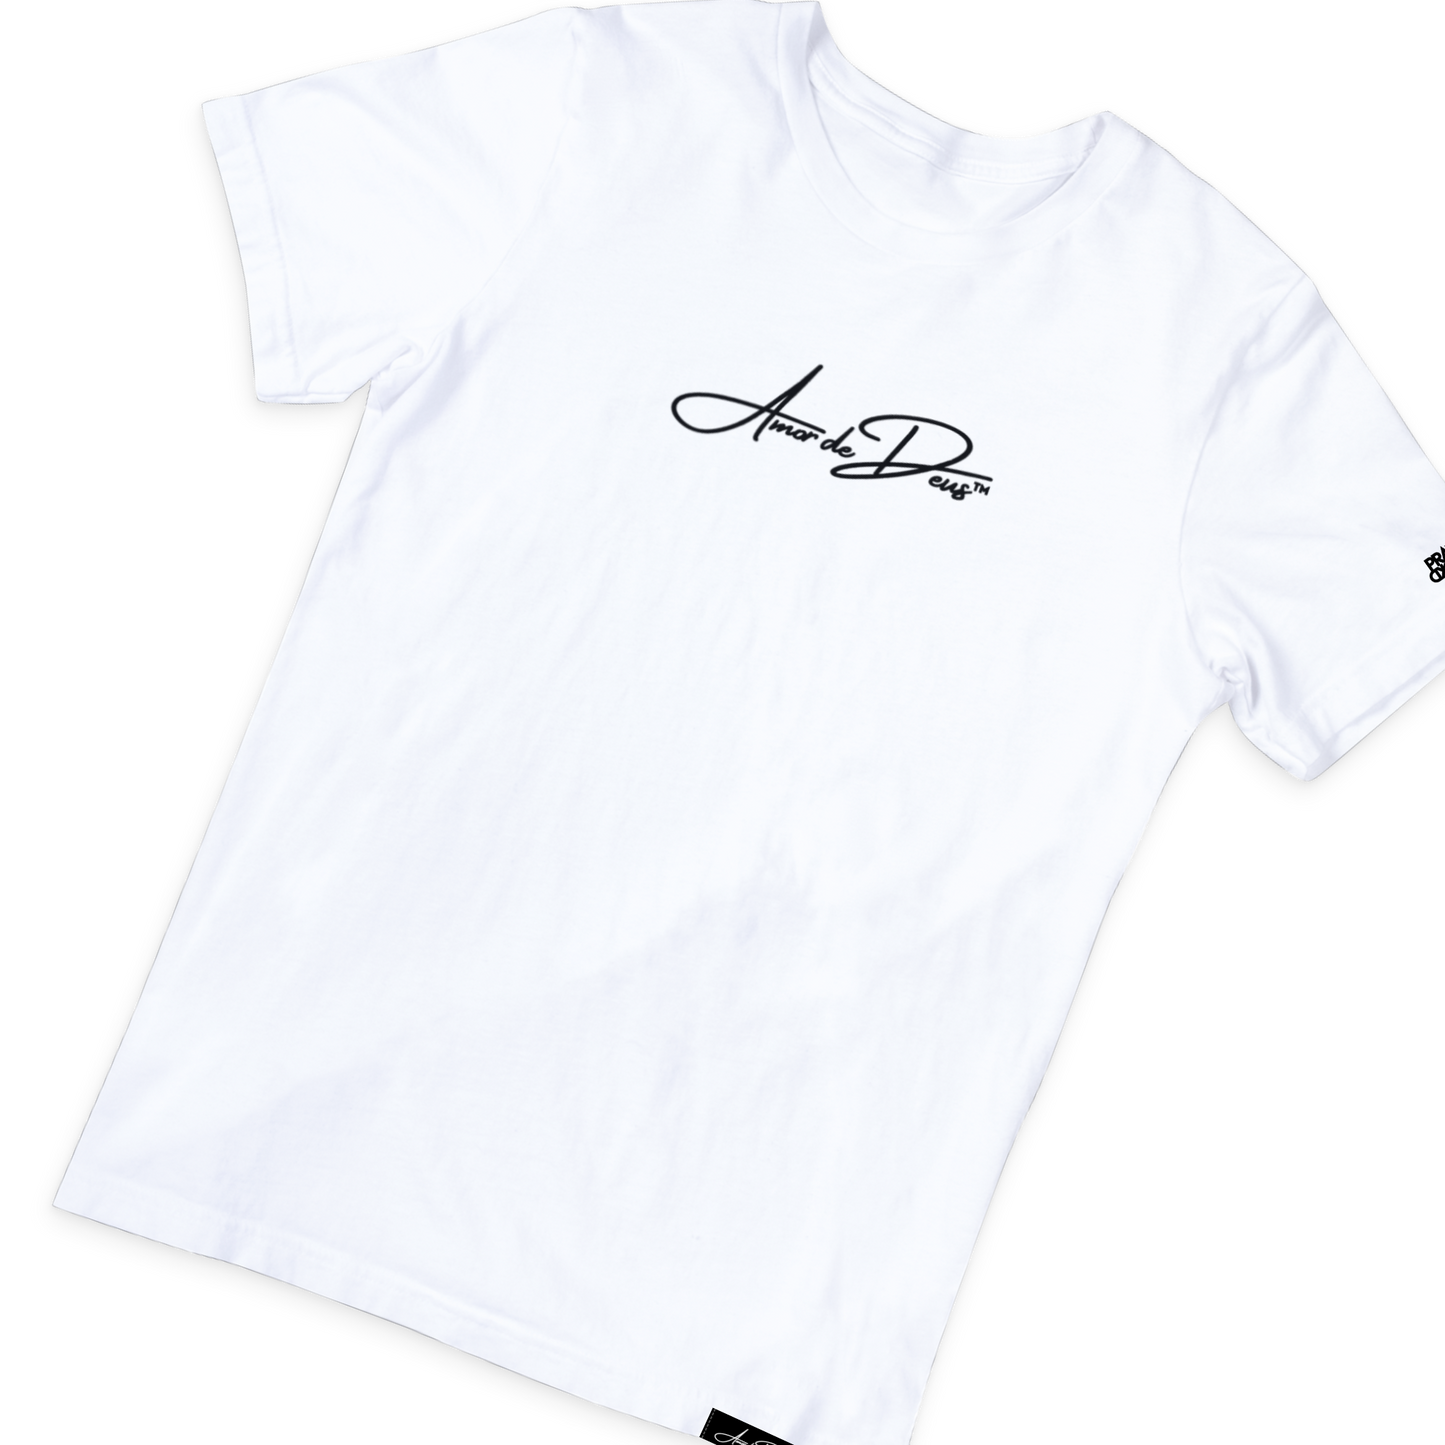 AmorDeDeus Script Logo T-Shirt - WHITE/BLACK